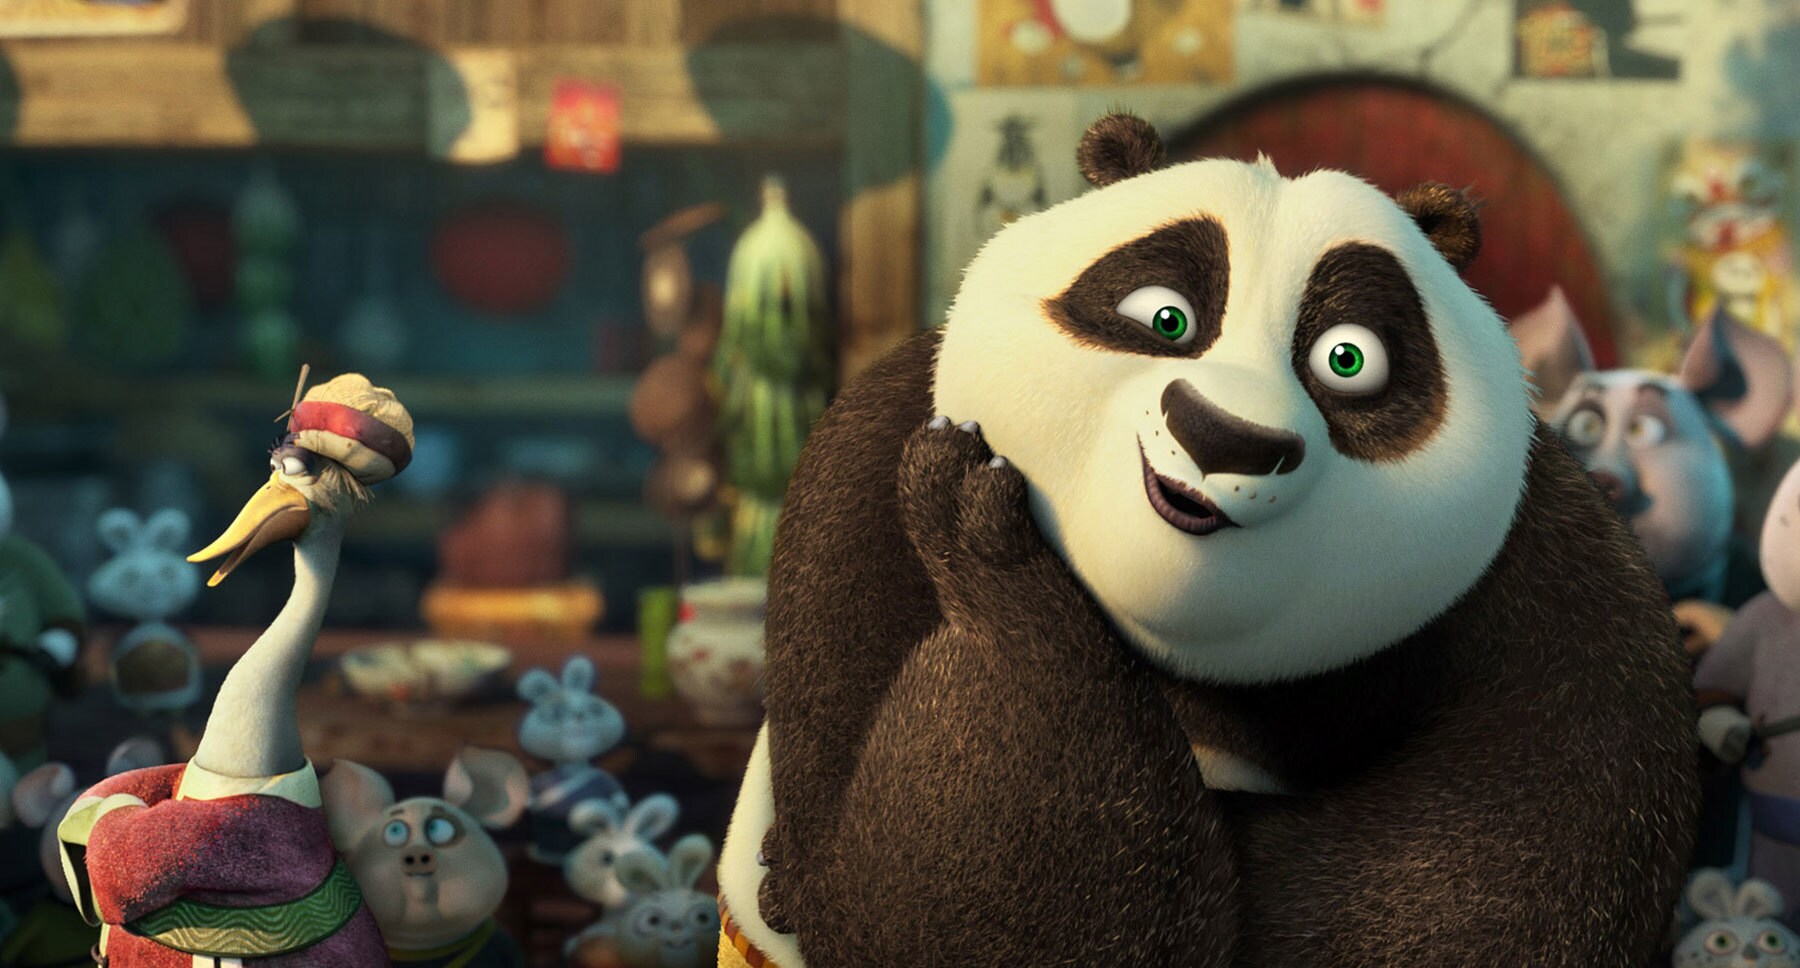 kung fu panda 3 full movie free download in english hd